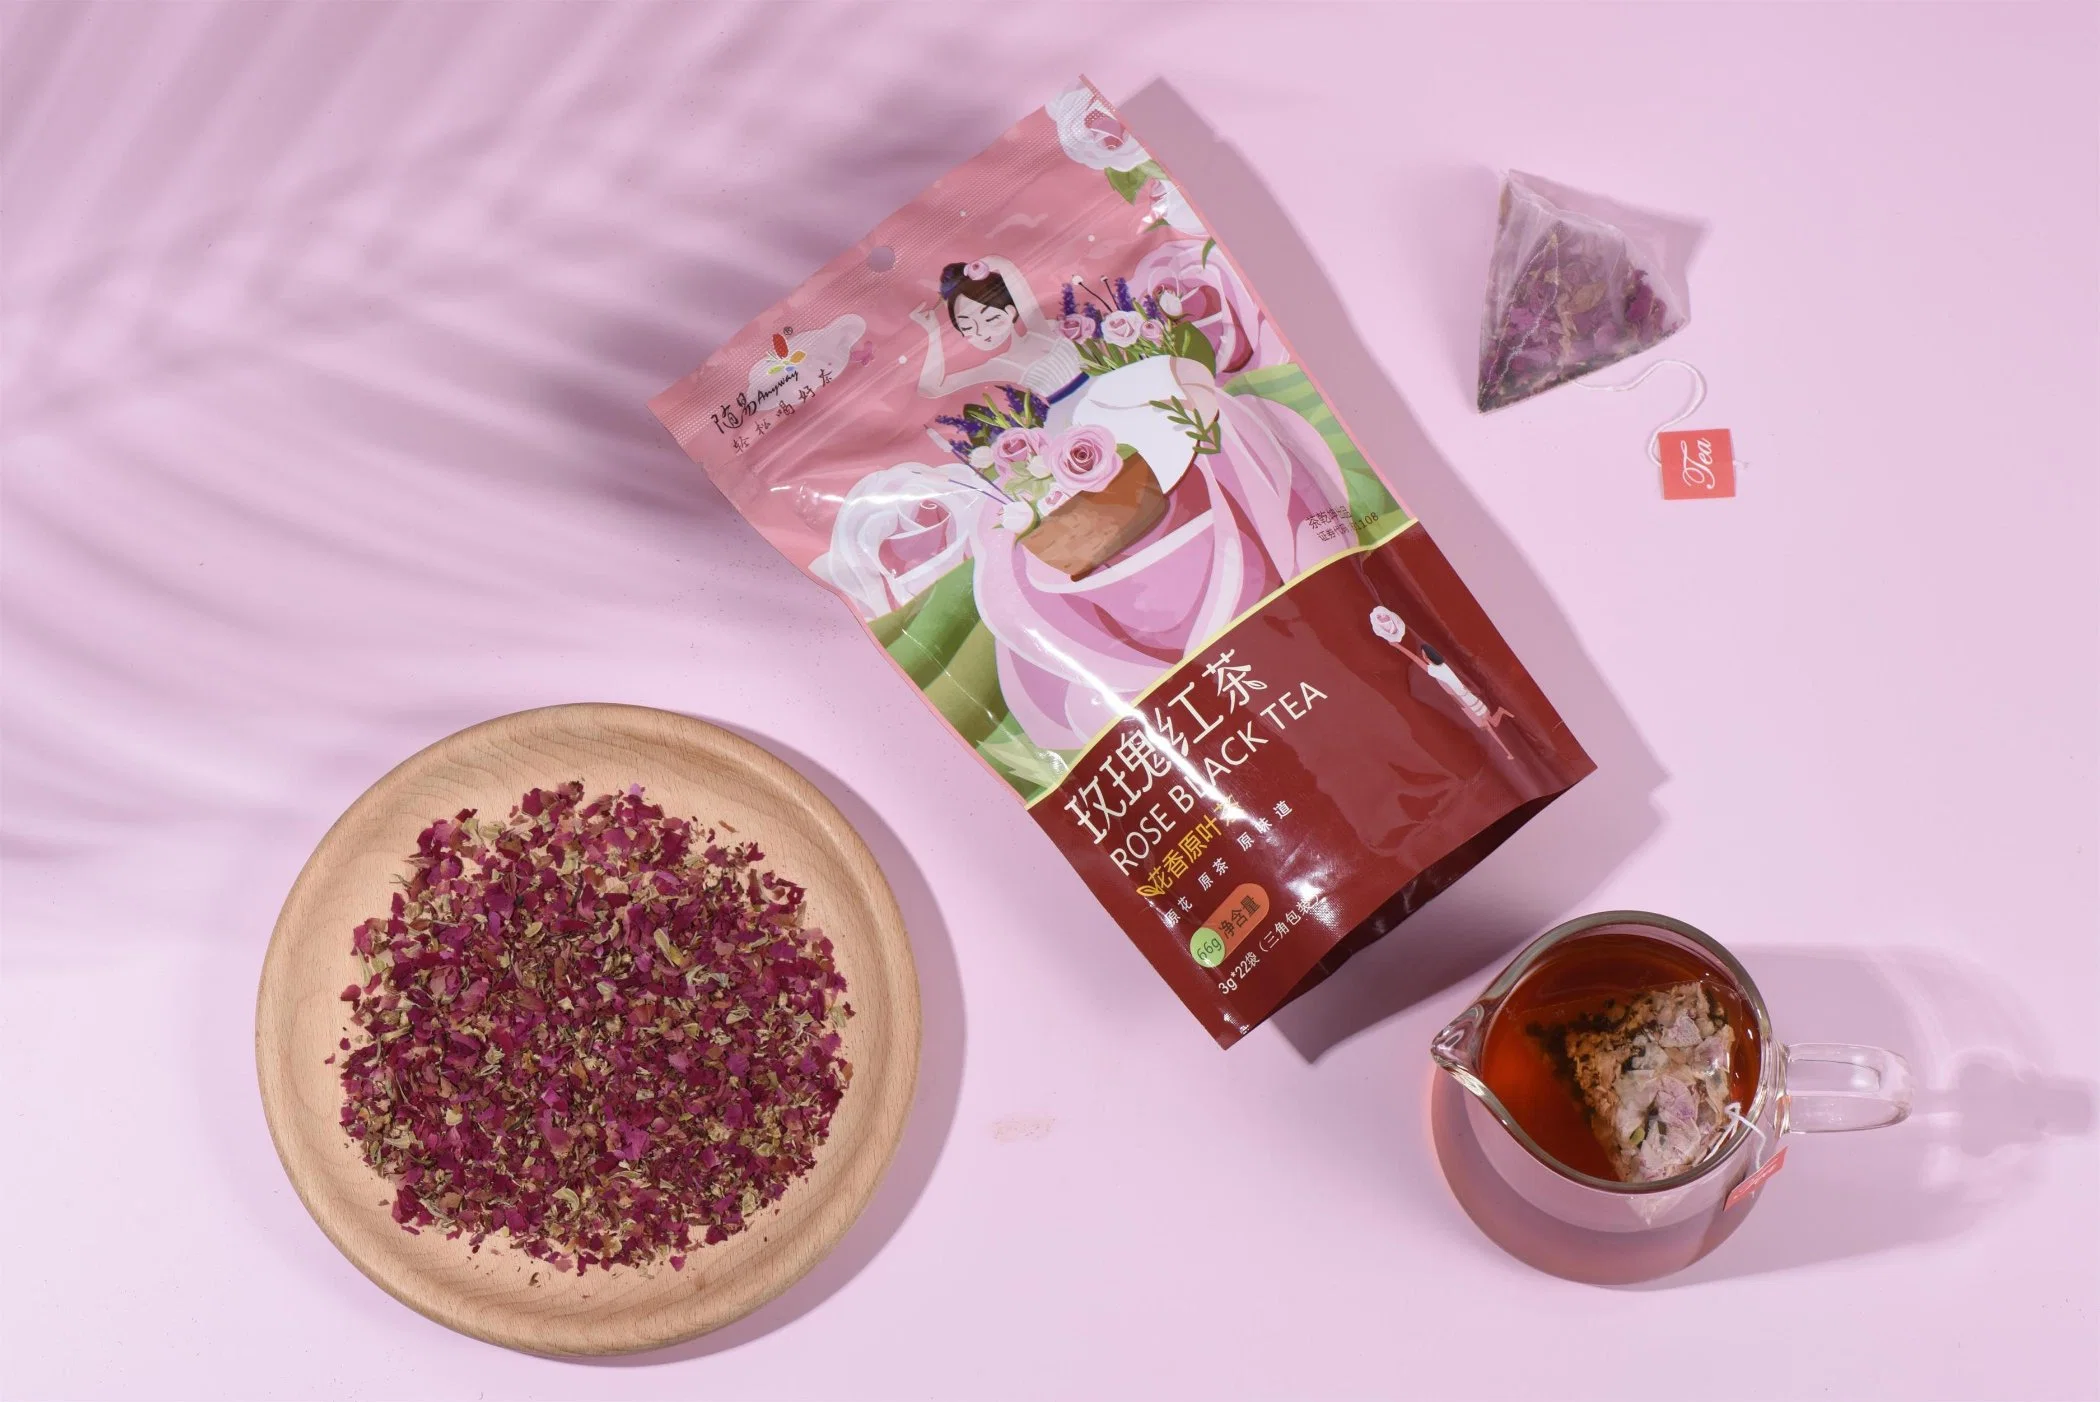 Delicious Rose Black Tea Bag Packaged Into Various Tea Bag Hot Sale